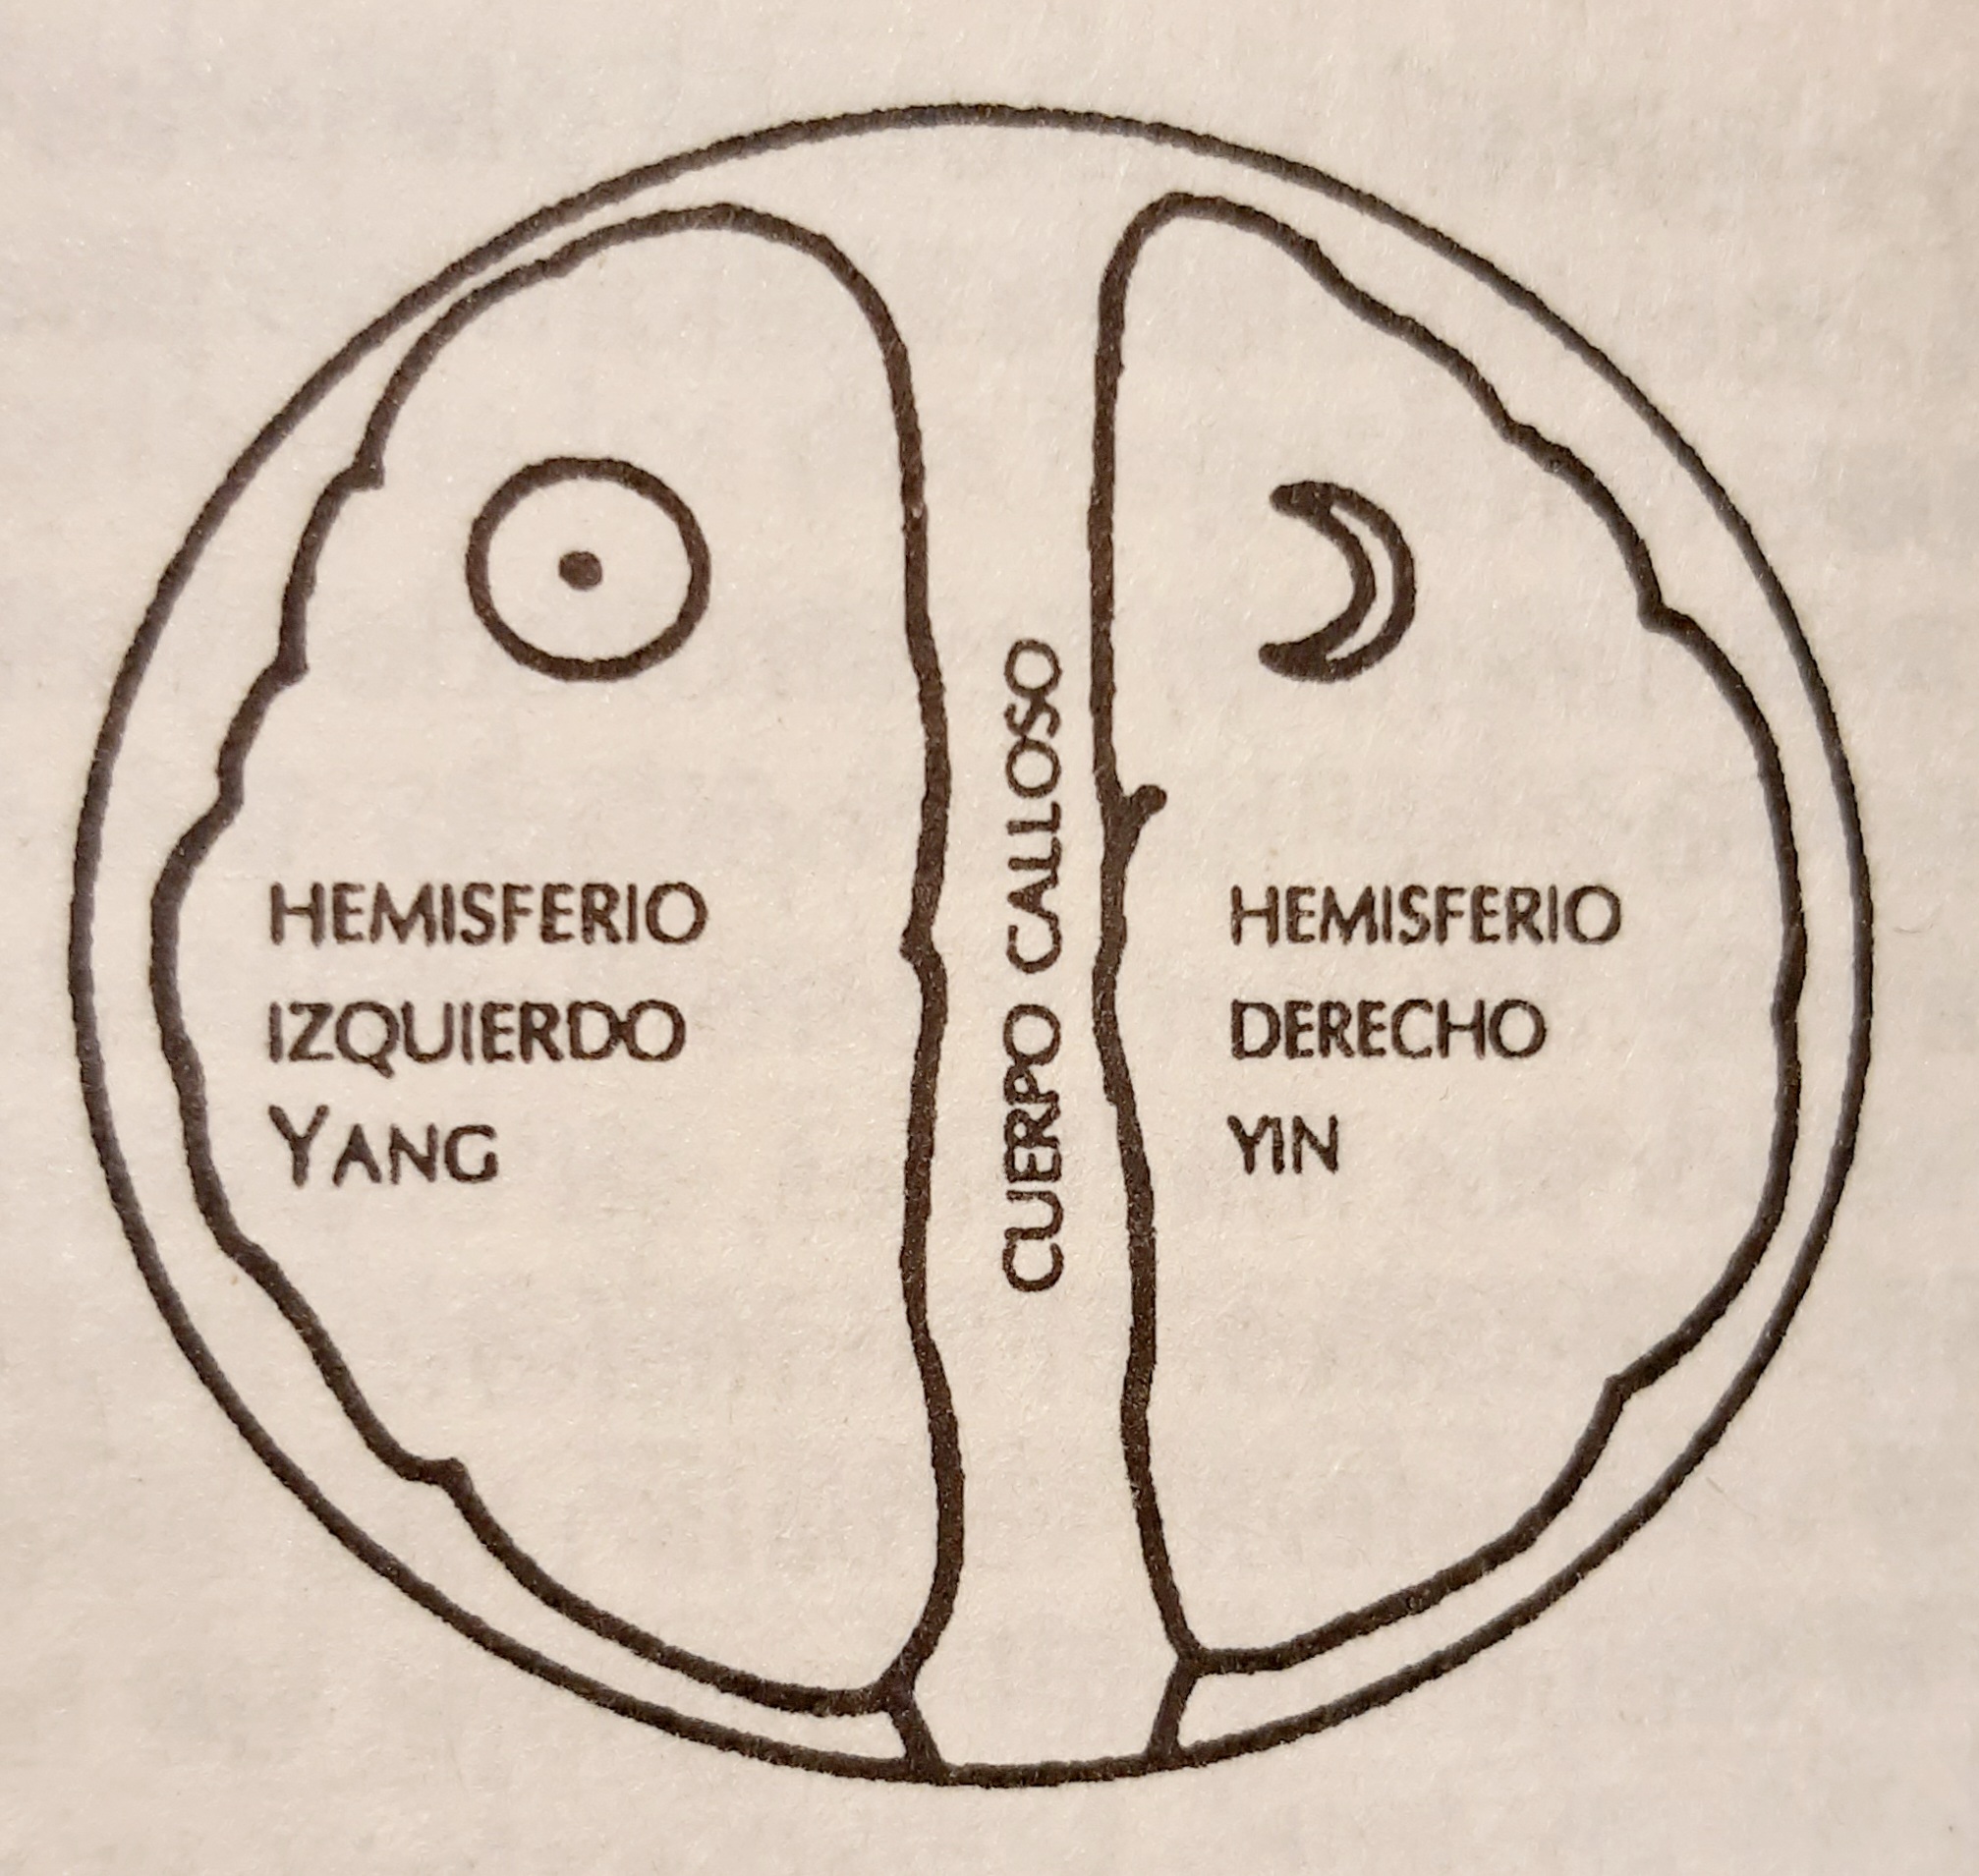 Hemisferios cerebrales